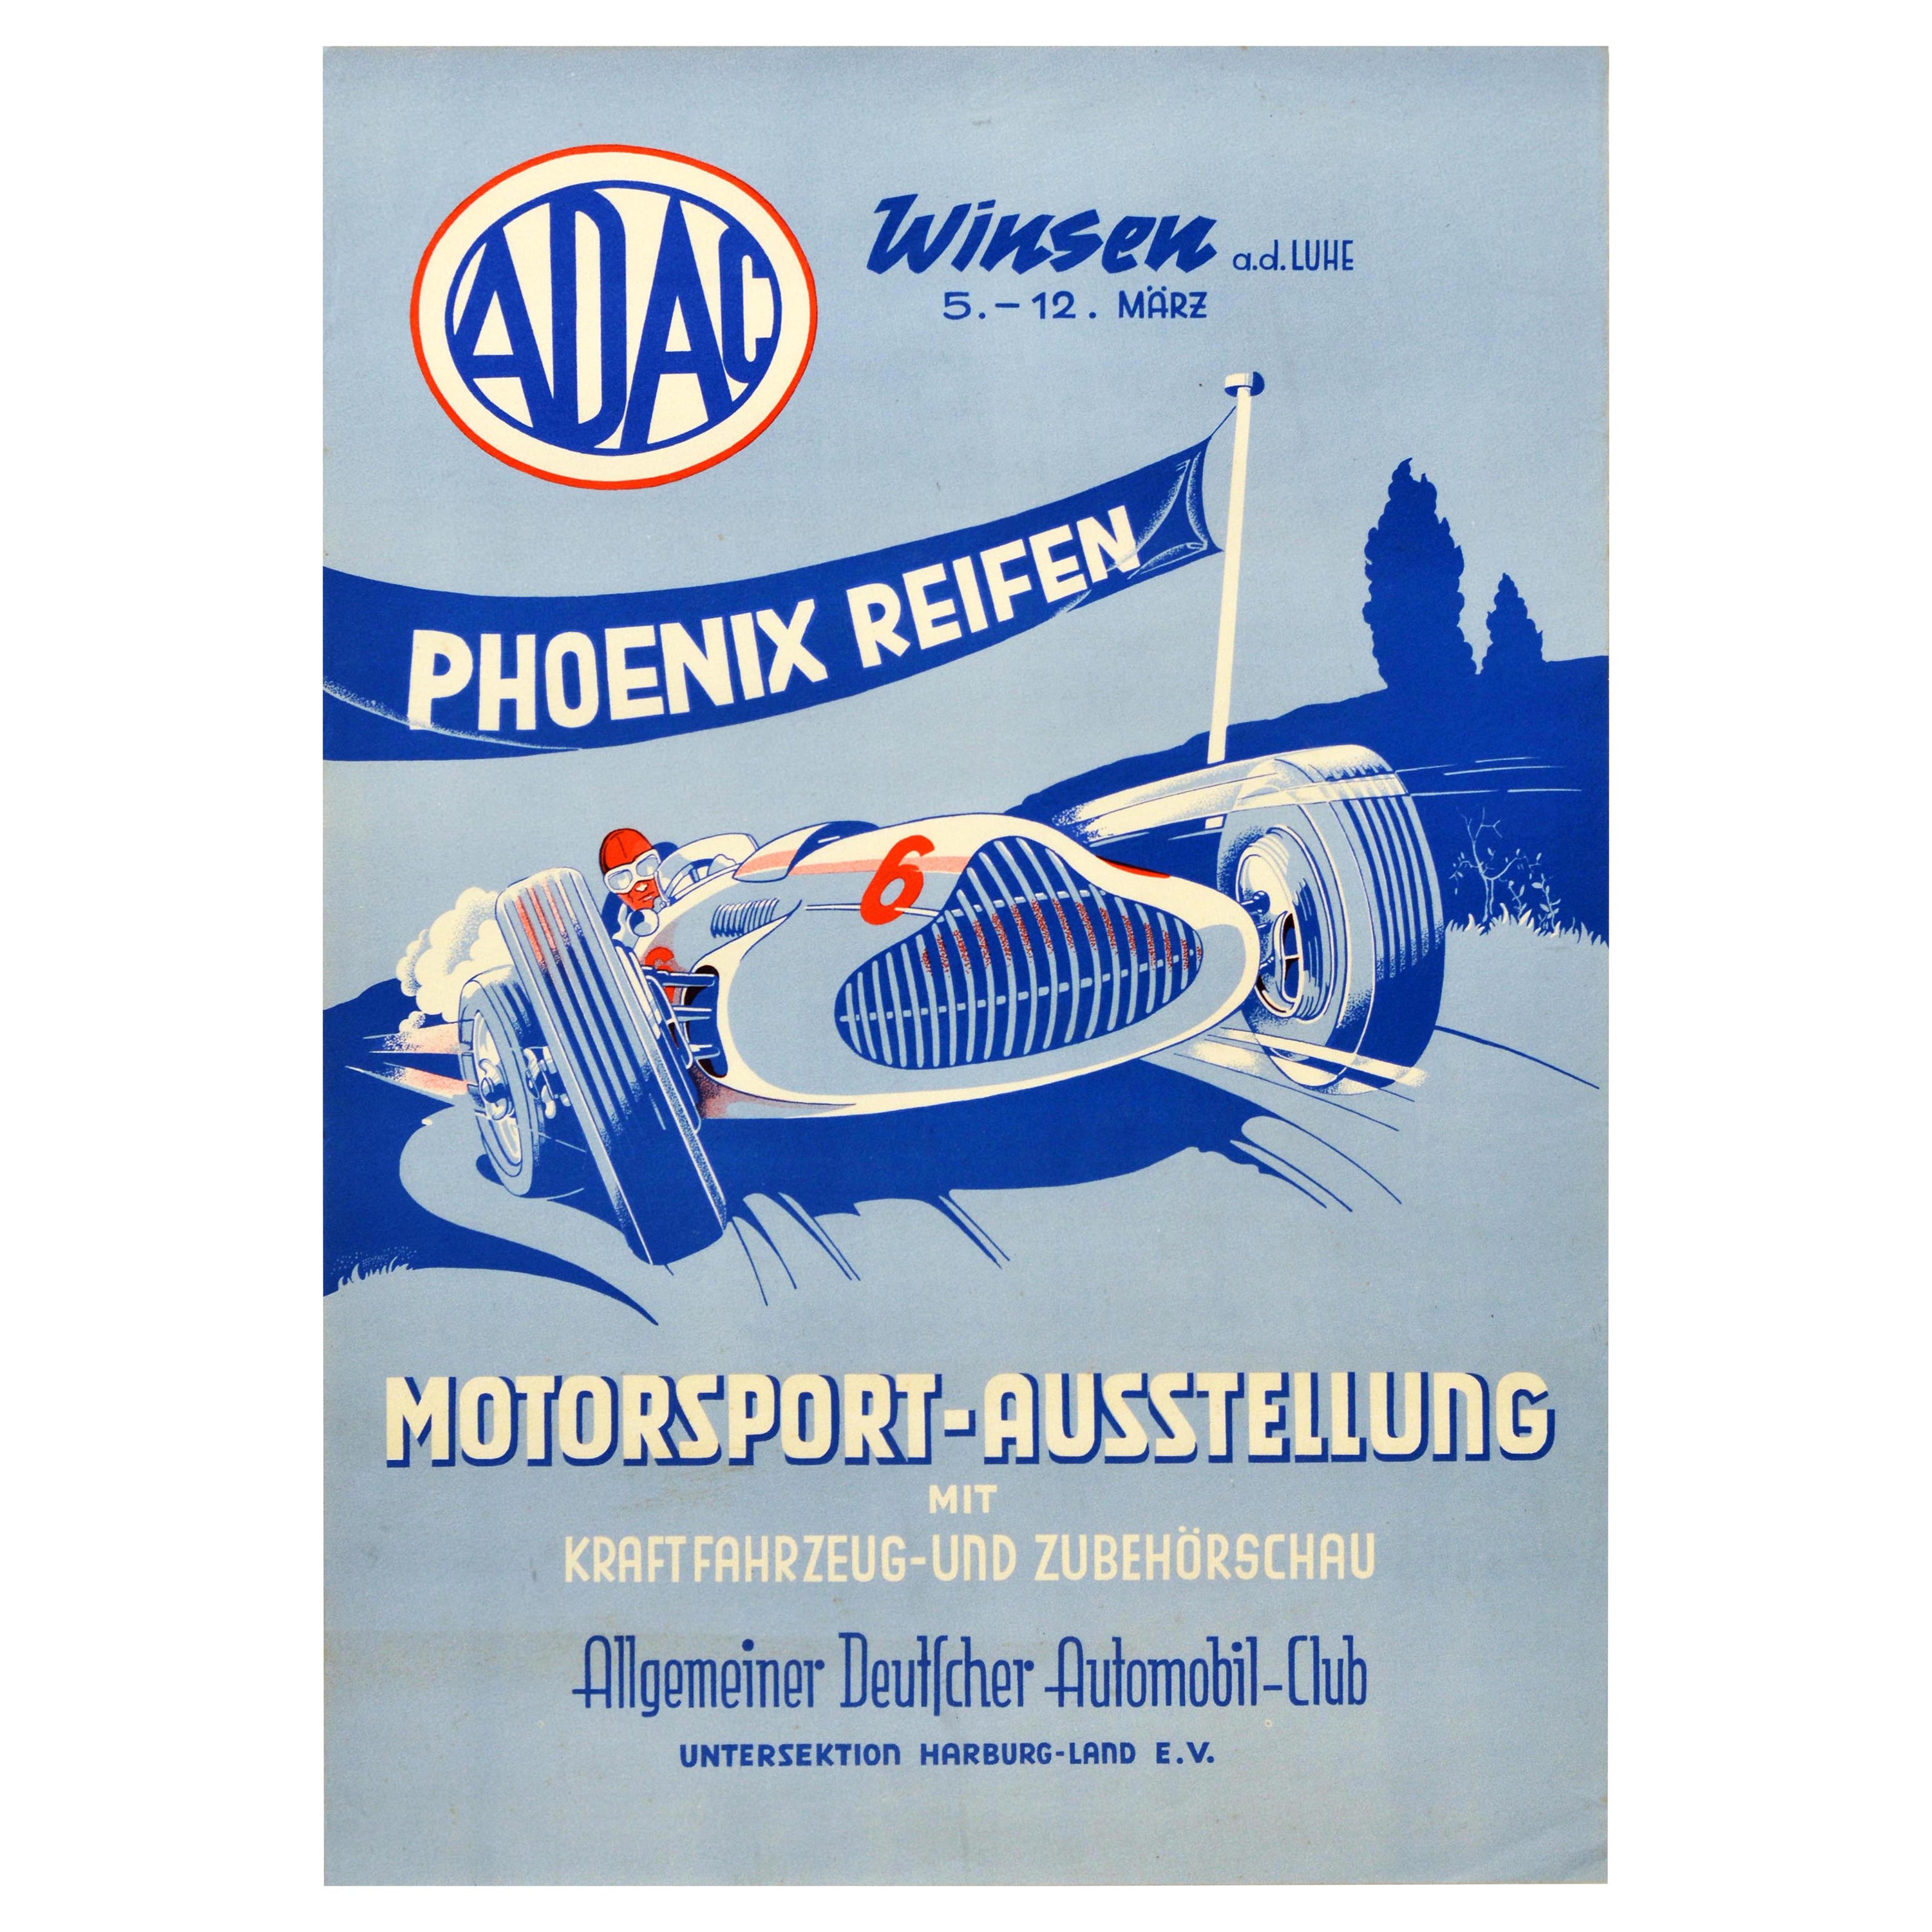 Original Vintage Poster Motorsport Car Exhibition ADAC Phoenix Reifen Tires Ad For Sale